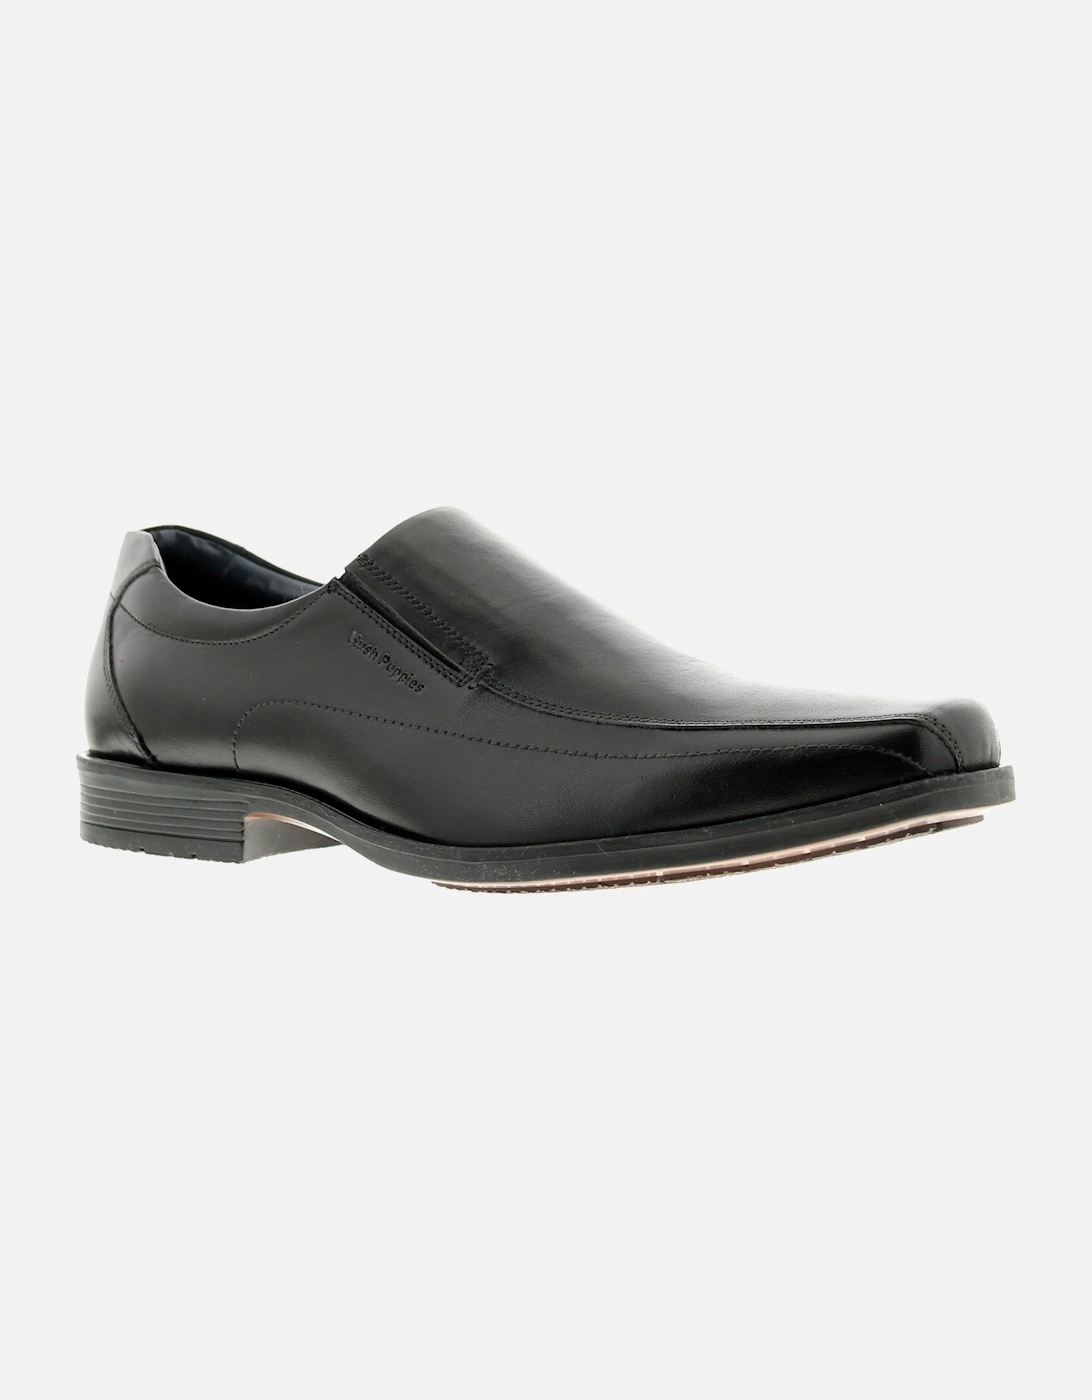 Mens Shoes Smart Brody Slip on Leather Slip On black UK Size, 6 of 5